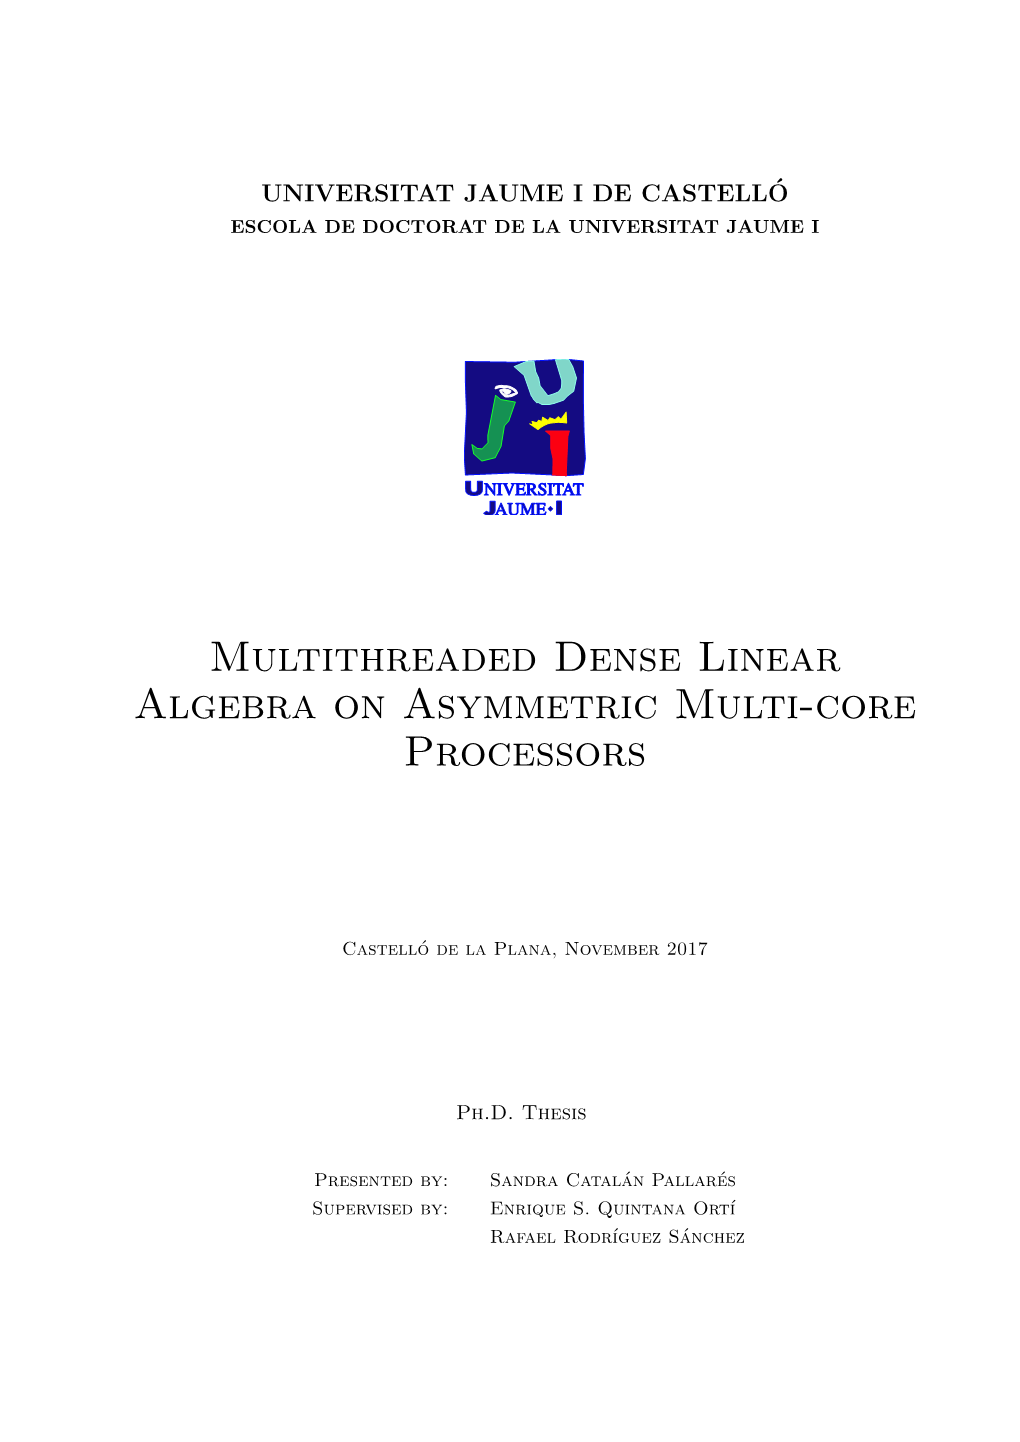 Multithreaded Dense Linear Algebra on Asymmetric Multi-Core Processors